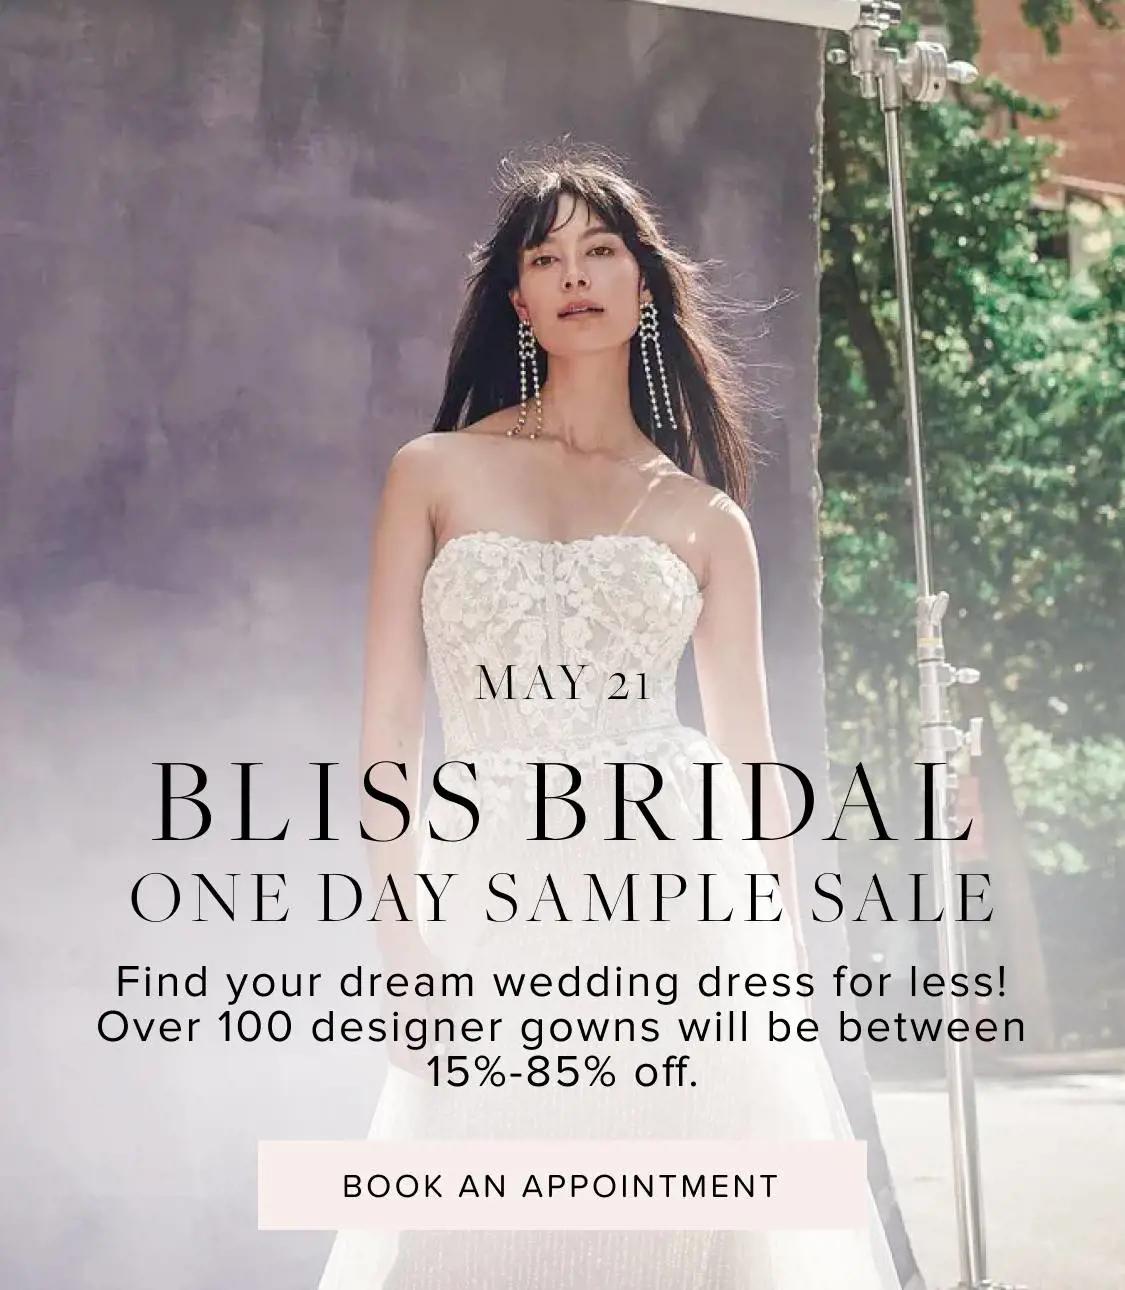 Sample sale at Bliss Bridal. Model wearing wedding dress.